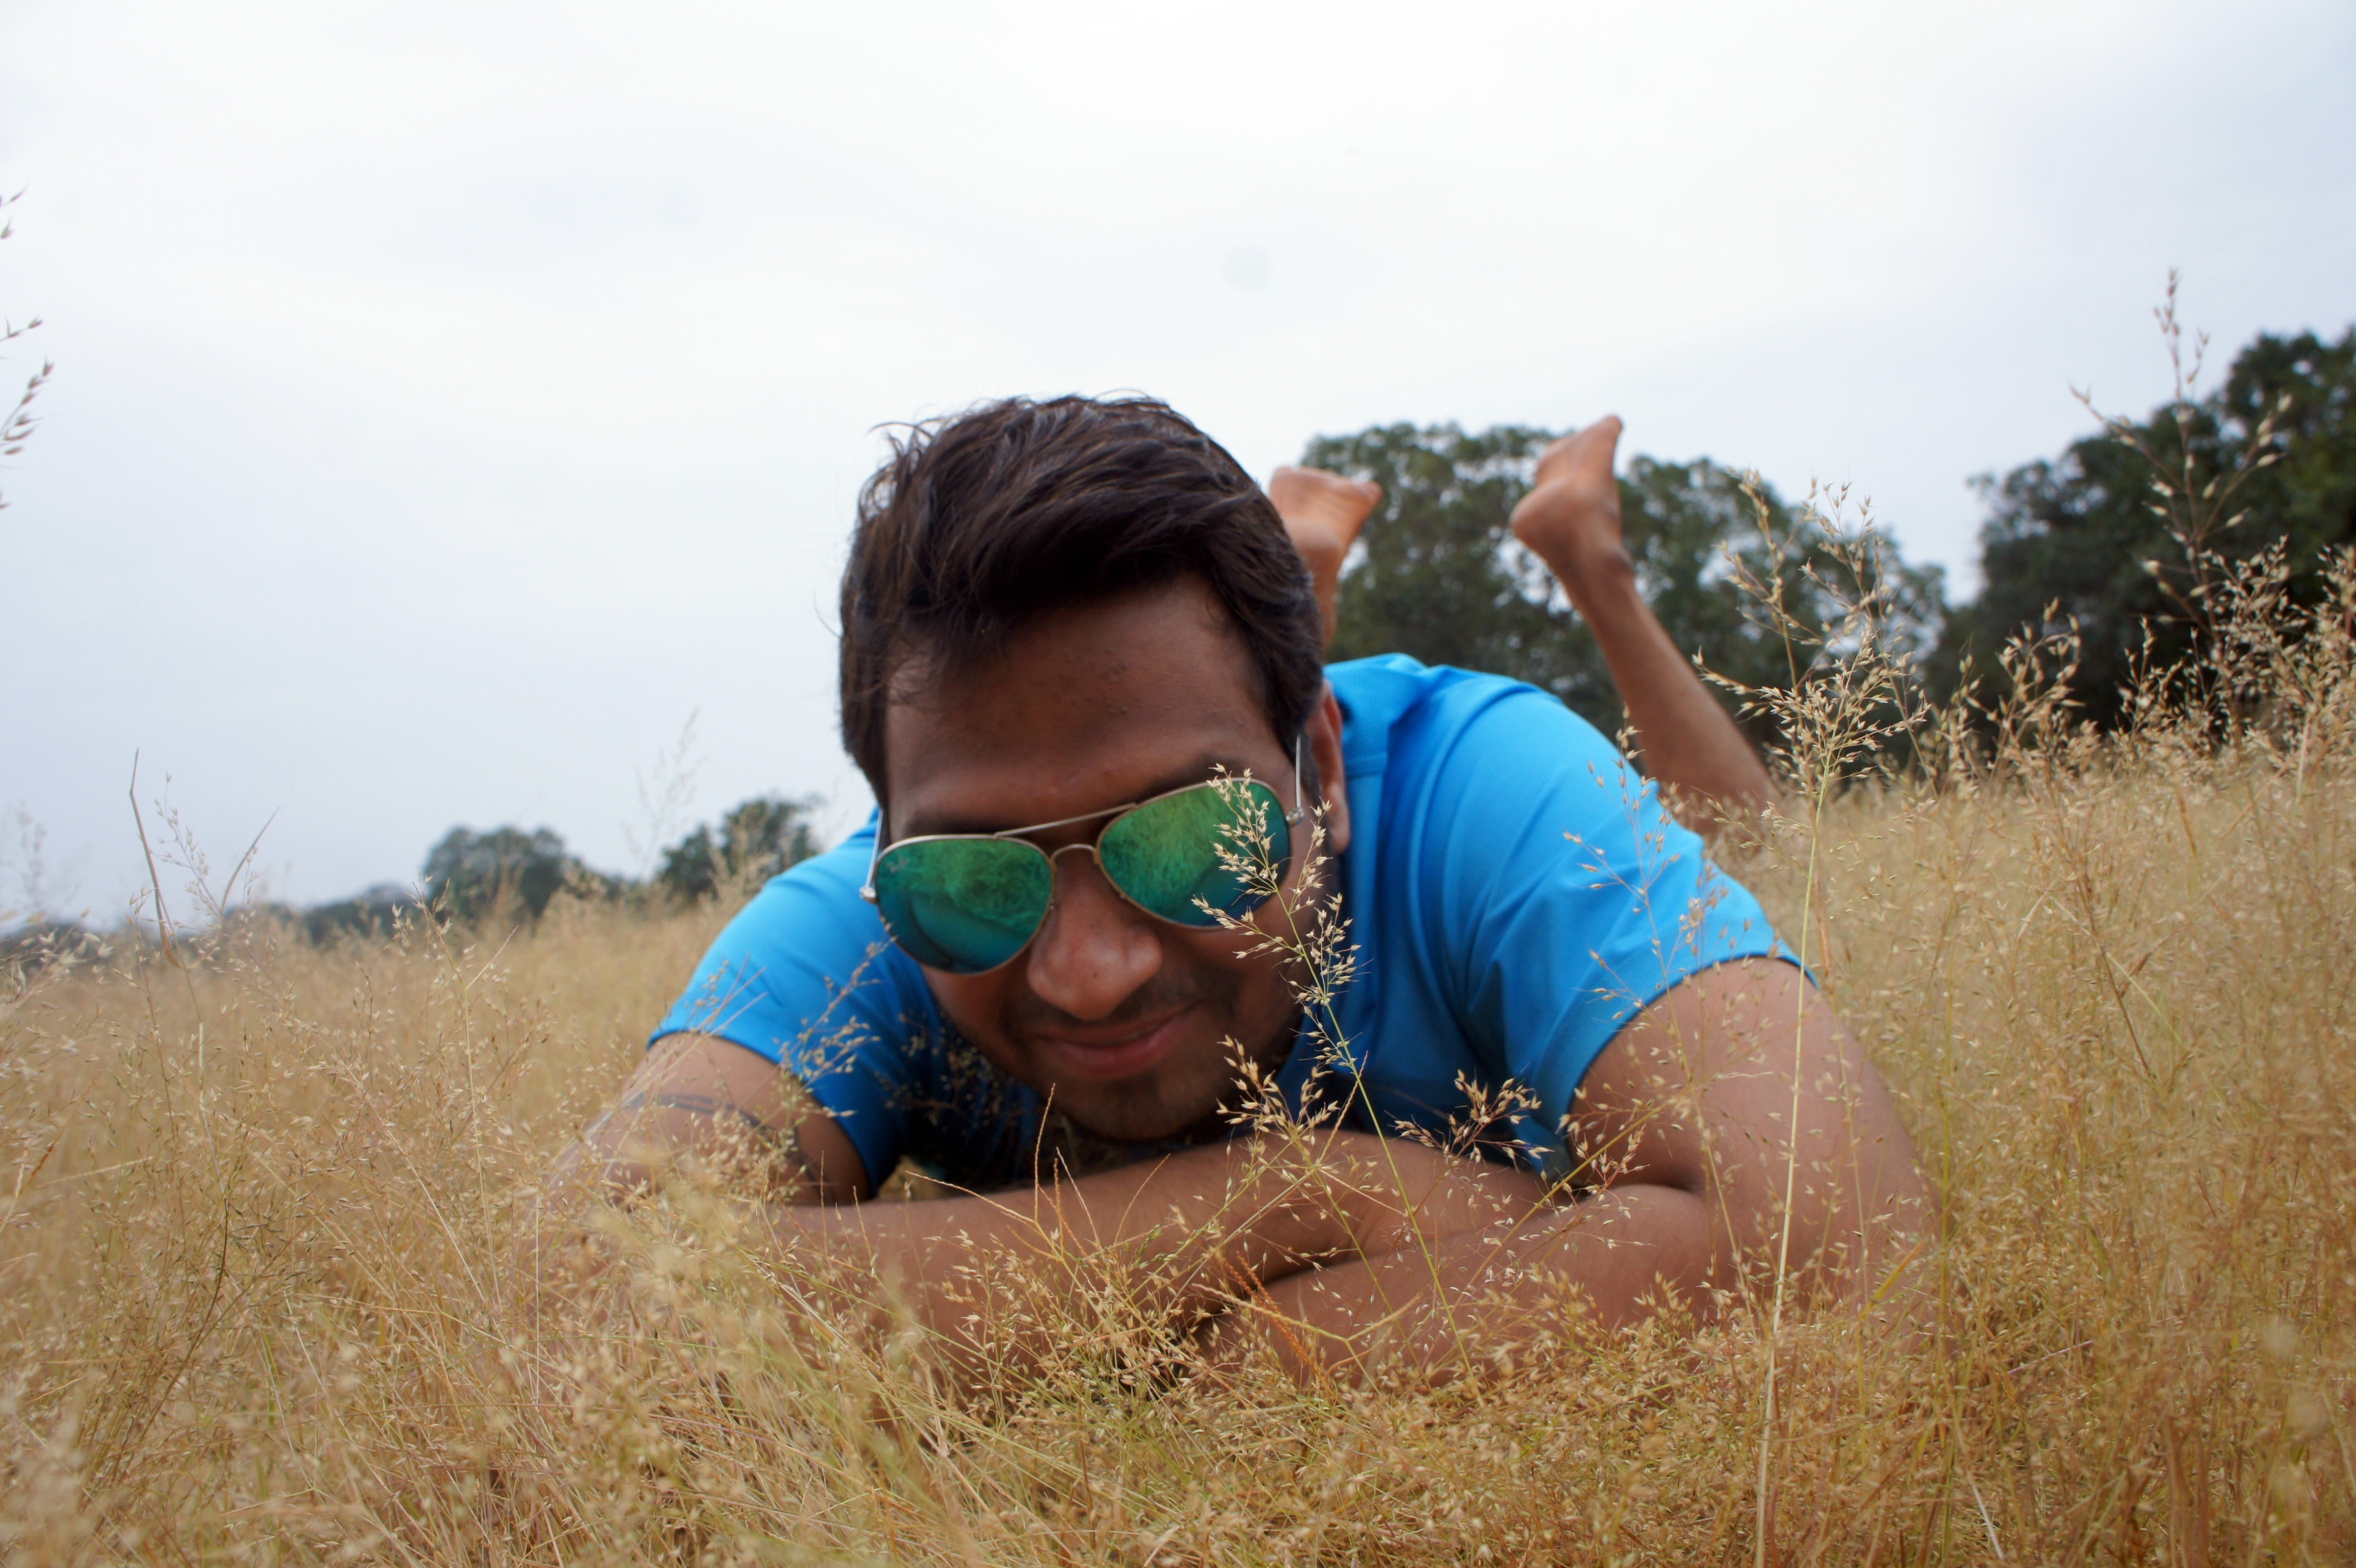 man wearing sunglasses and blue t-shirt lying on grass field